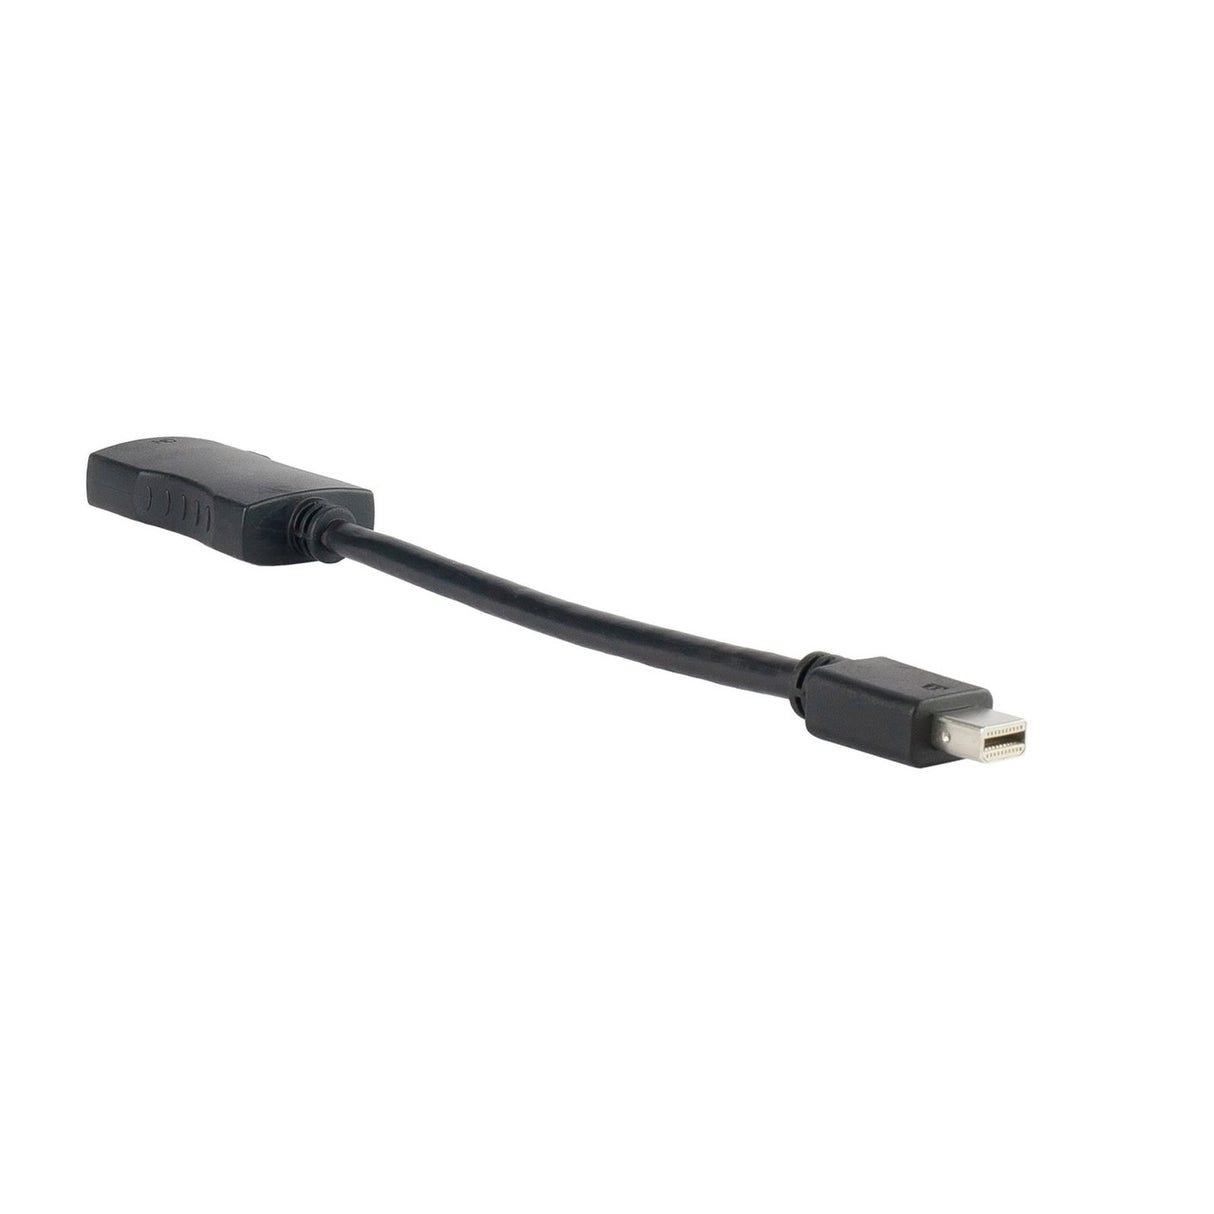 DigitaLinx AR-MDPM-HDF | 8 Inch Mini DisplayPort Male to HDMI Female Cable Adapter for Thunderbolt